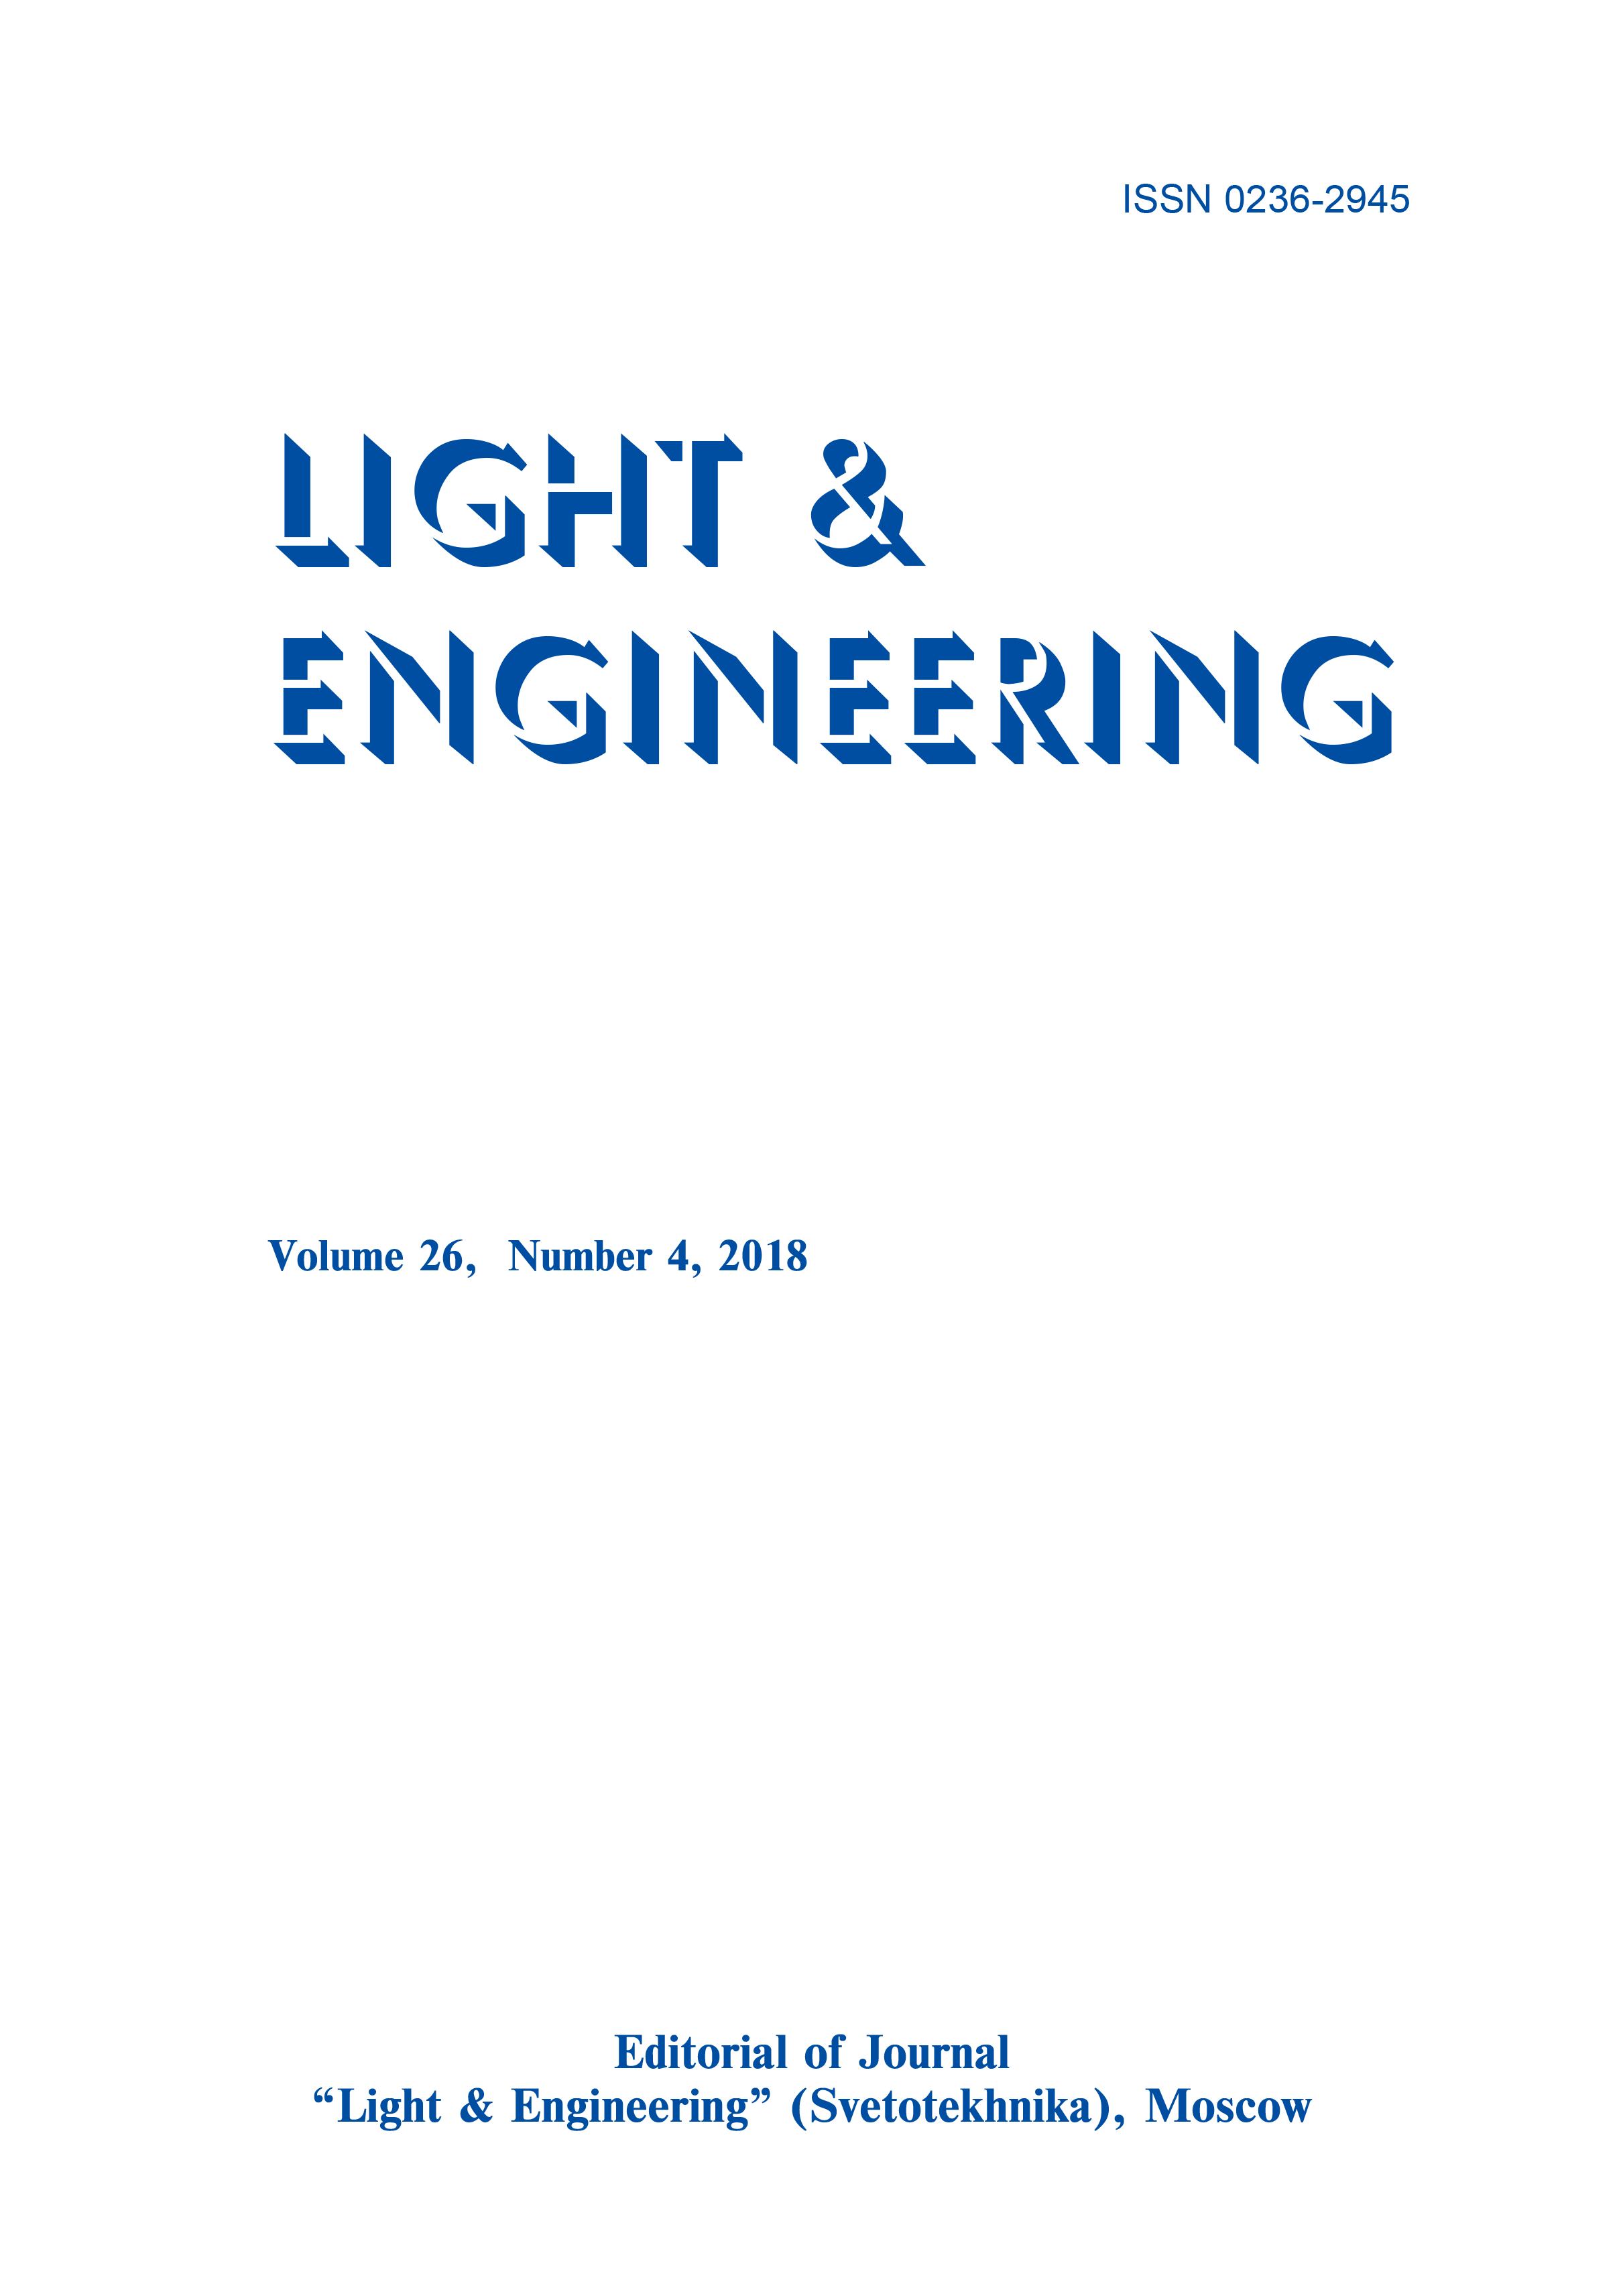 Classroom Lighting Energy-Saving Control System Based on Machine Vision Technology. L&E 26 (4) 2018